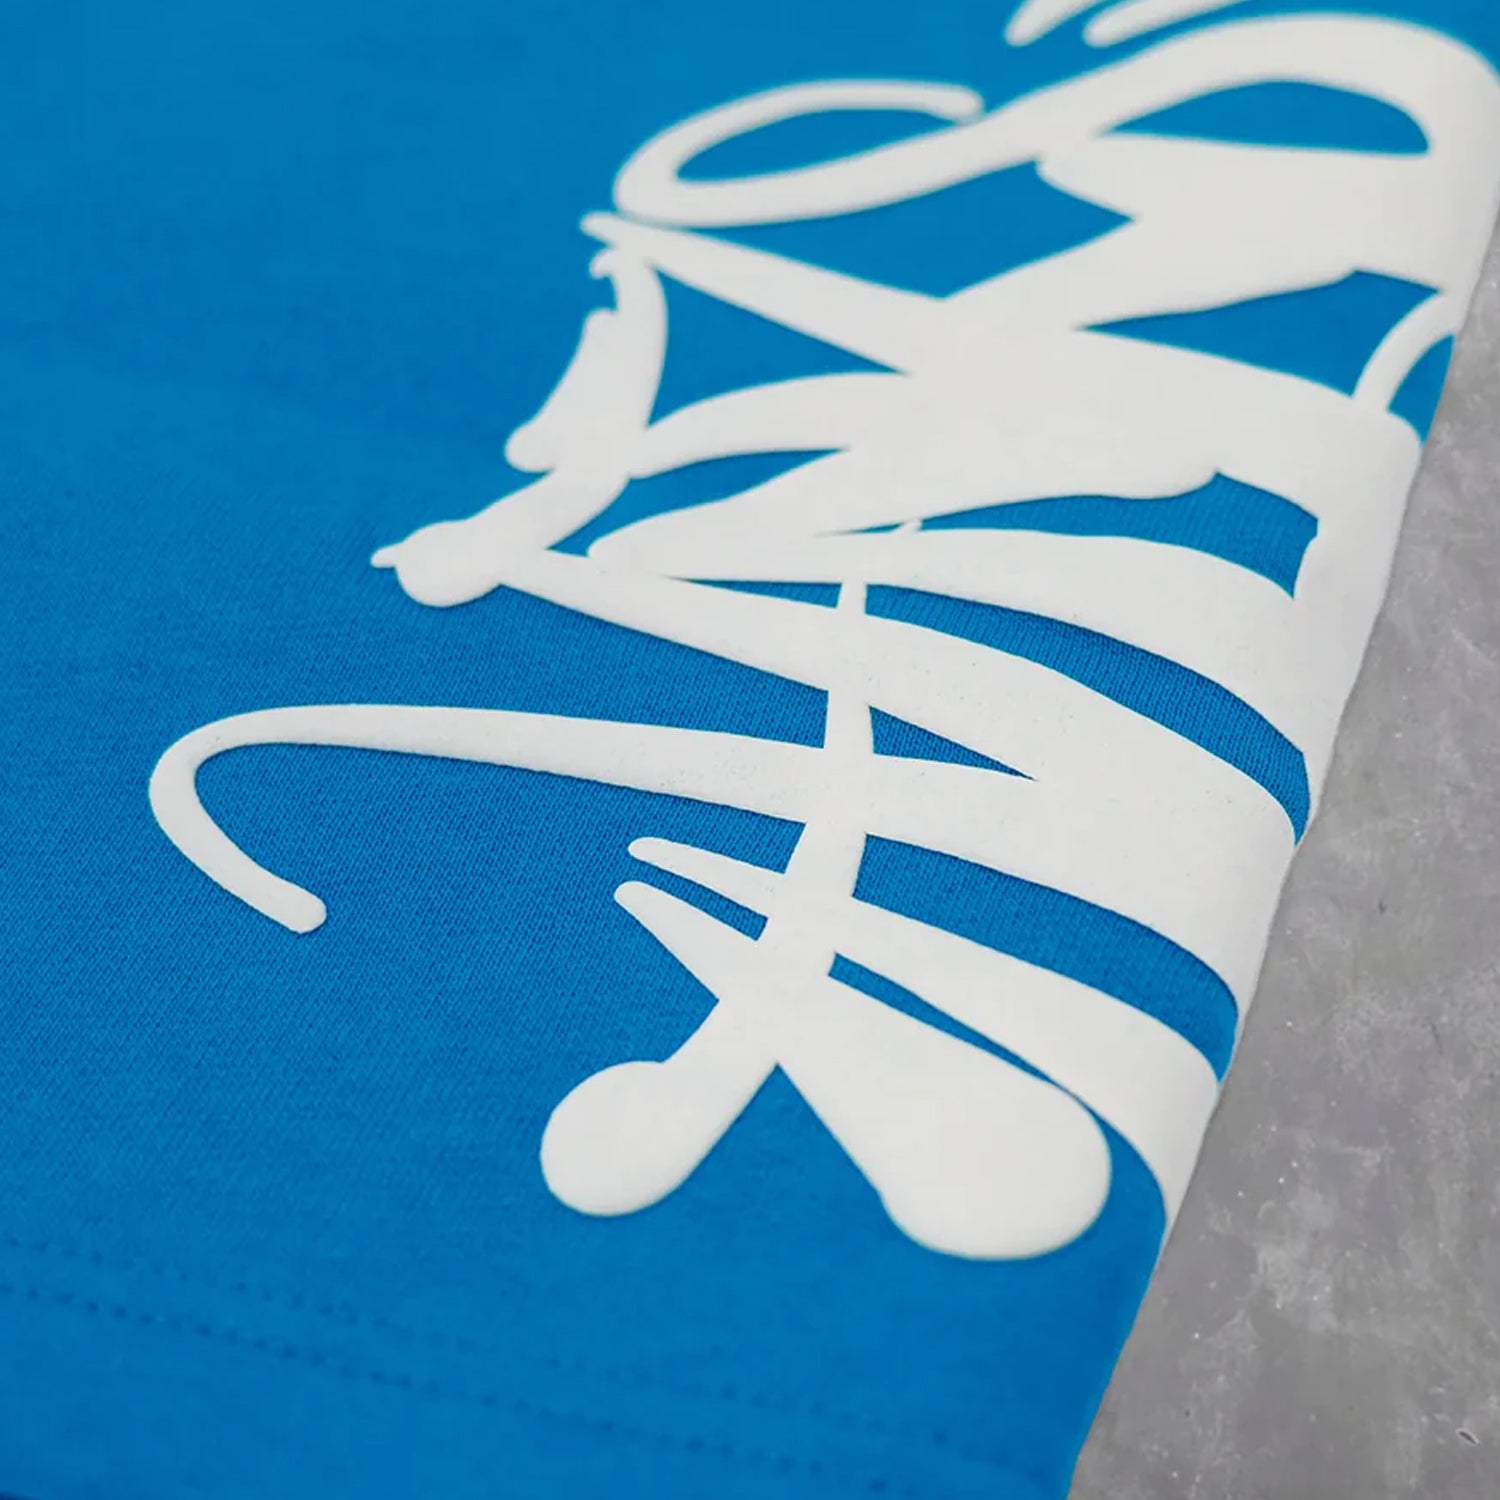 Syna World Team T-Shirt & Shorts Logo Set - Blue / White